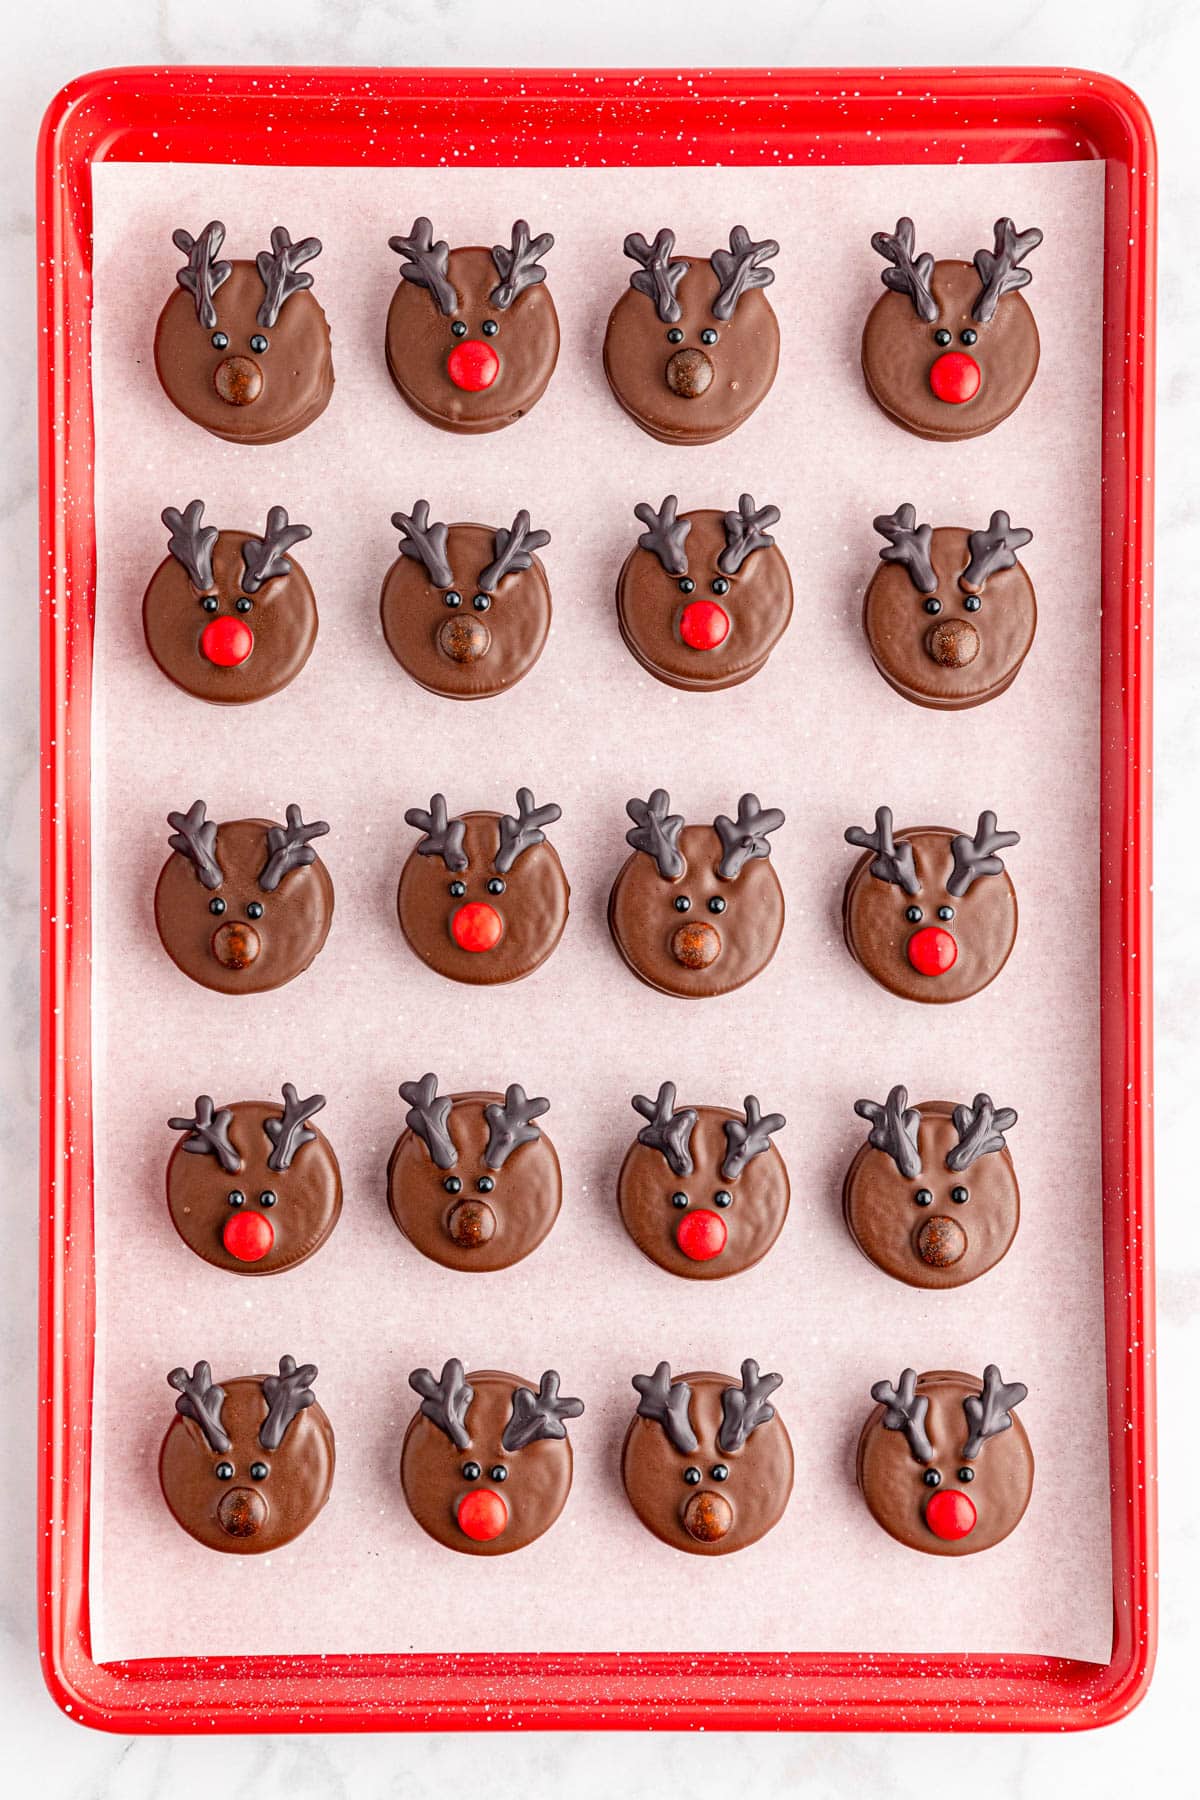 Chocolate reindeer heads on a tray.